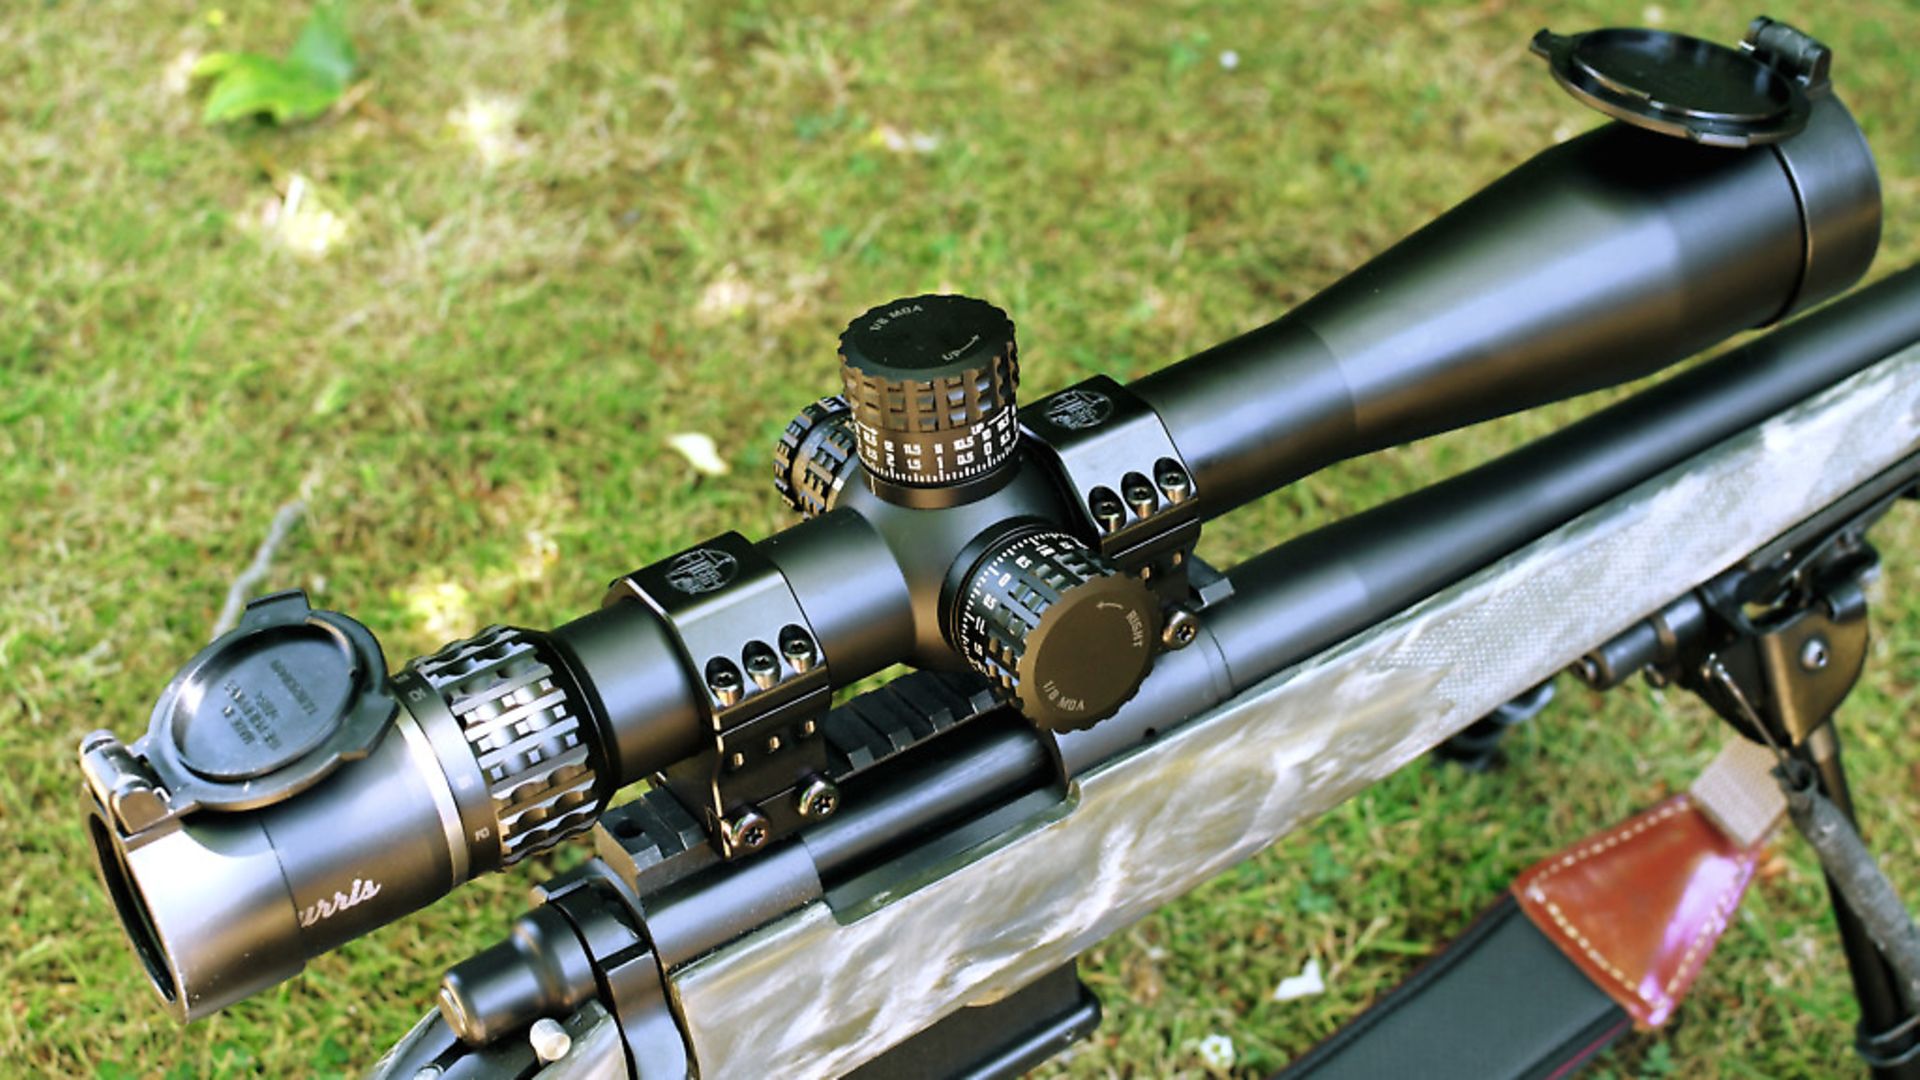 Burris XTR II 8-40x50 Riflescope - test and review